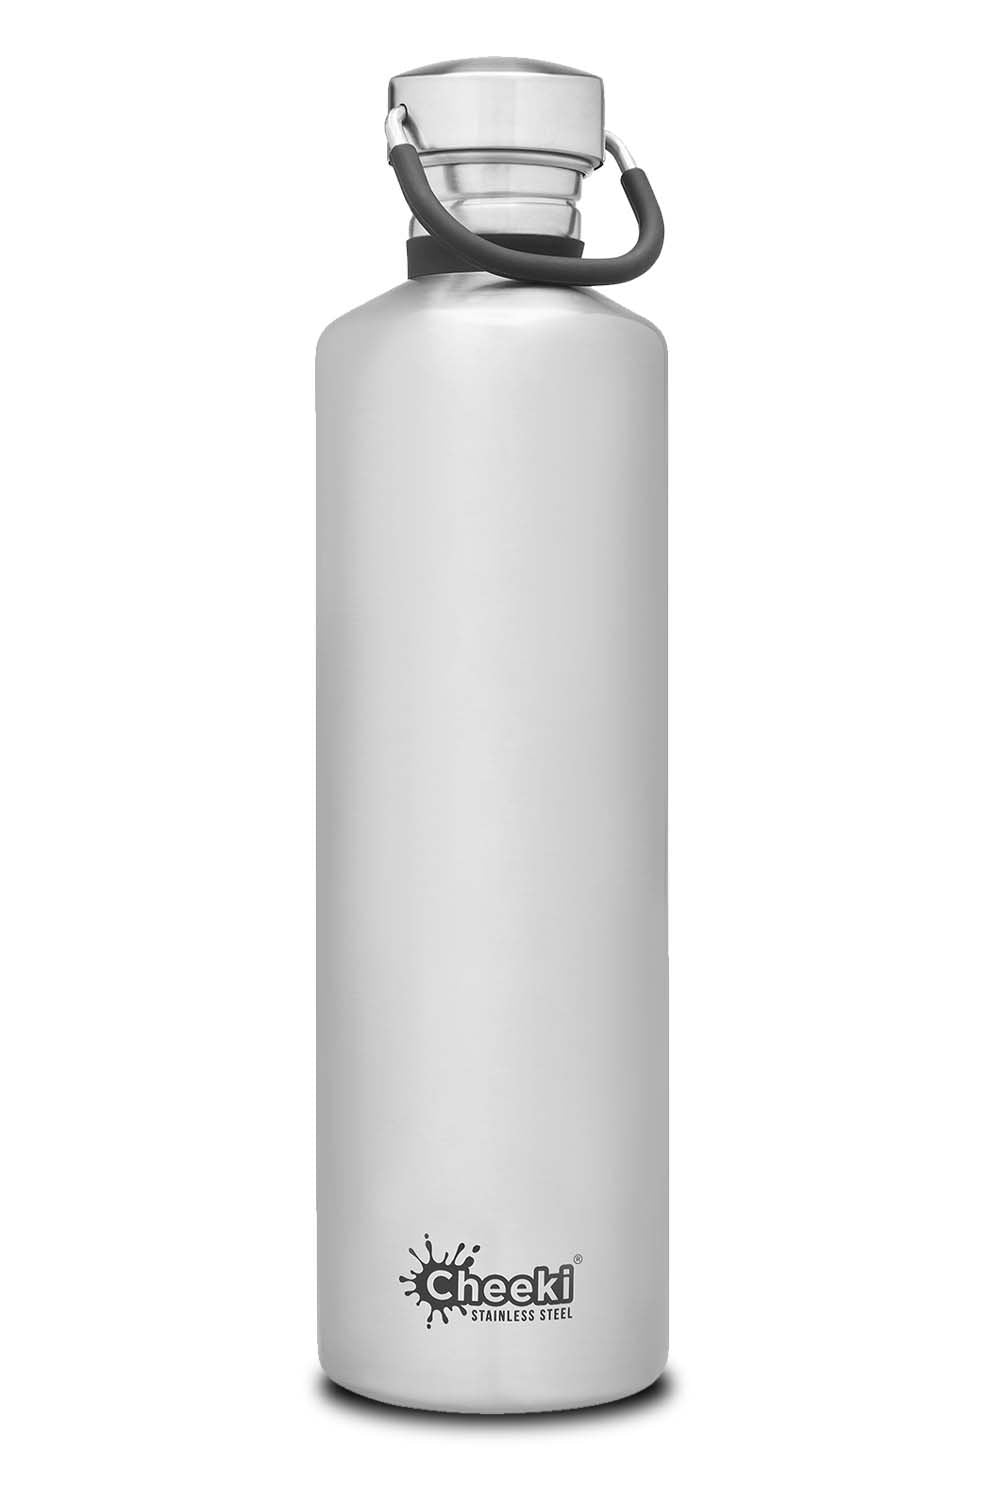 Cheeki Classic Single Wall Bottle Stainless Steel Silver 1 Litre